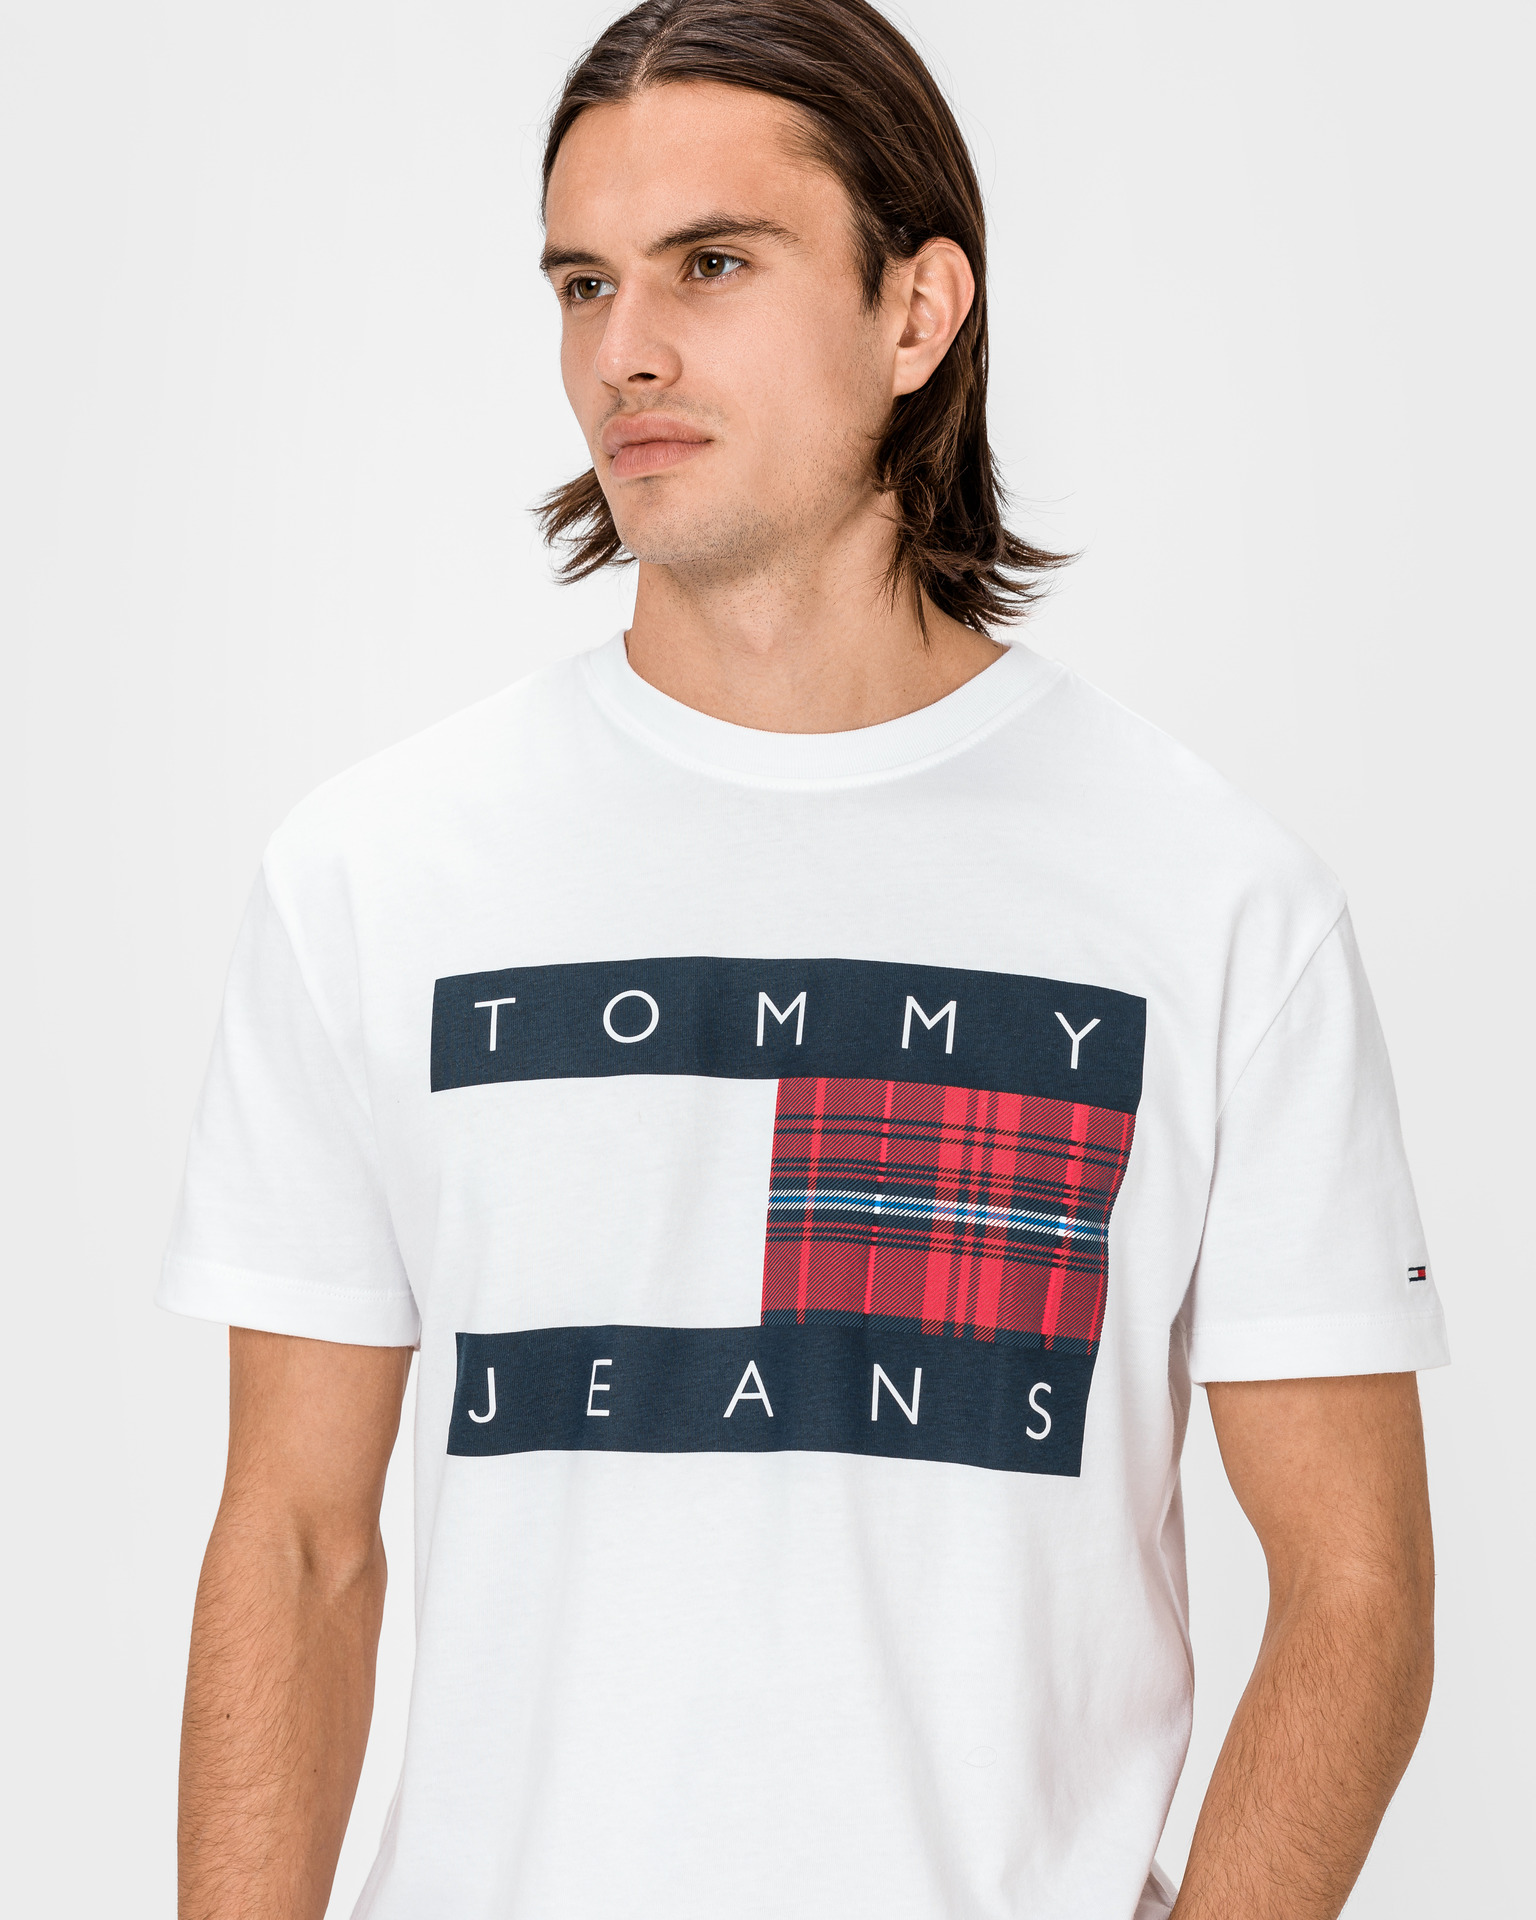 Tommy Jeans - Centre T-shirt Bibloo.com